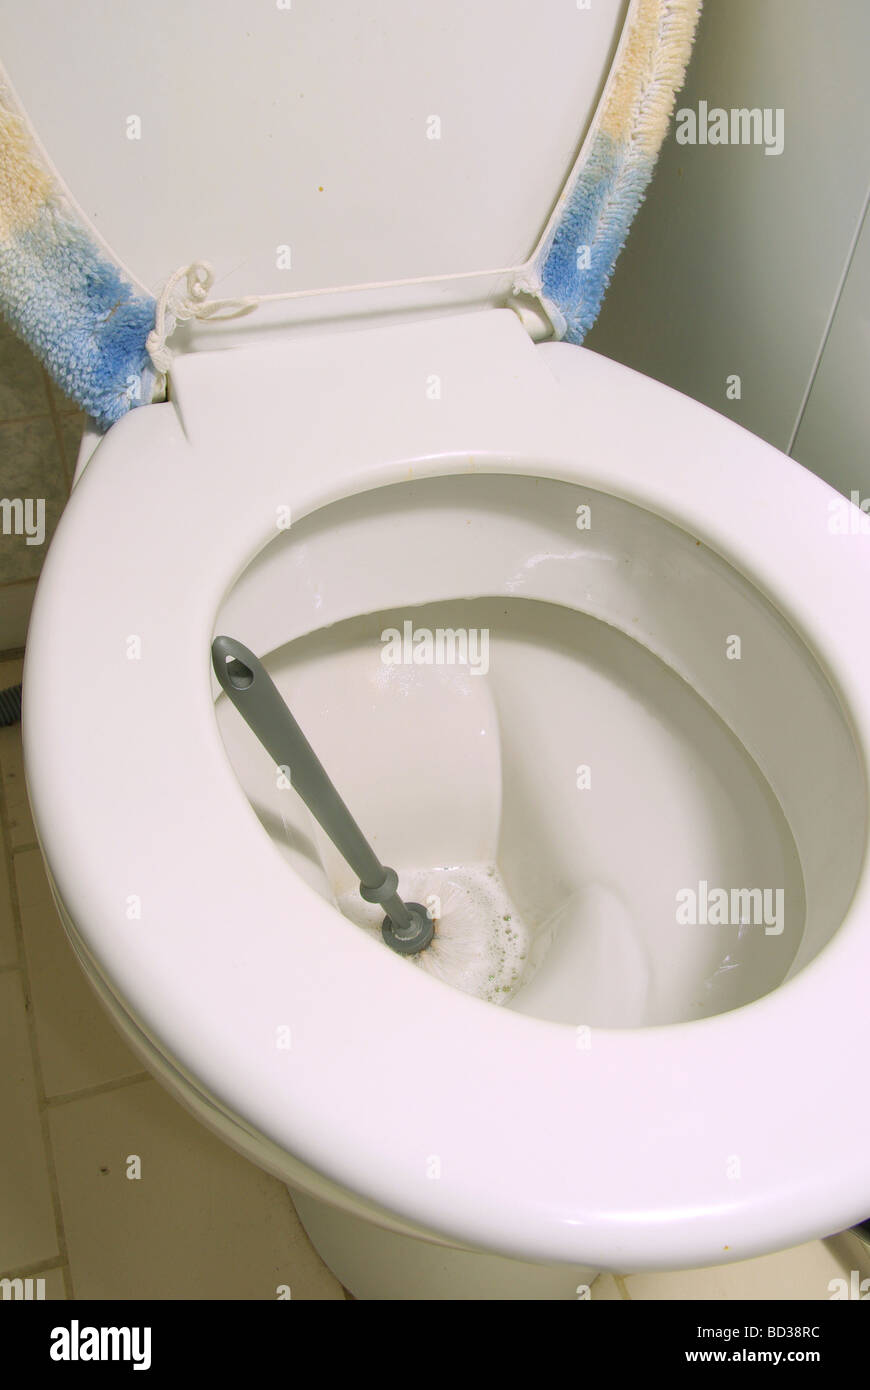 Toilette putzen toilet cleaning 04 Stock Photo